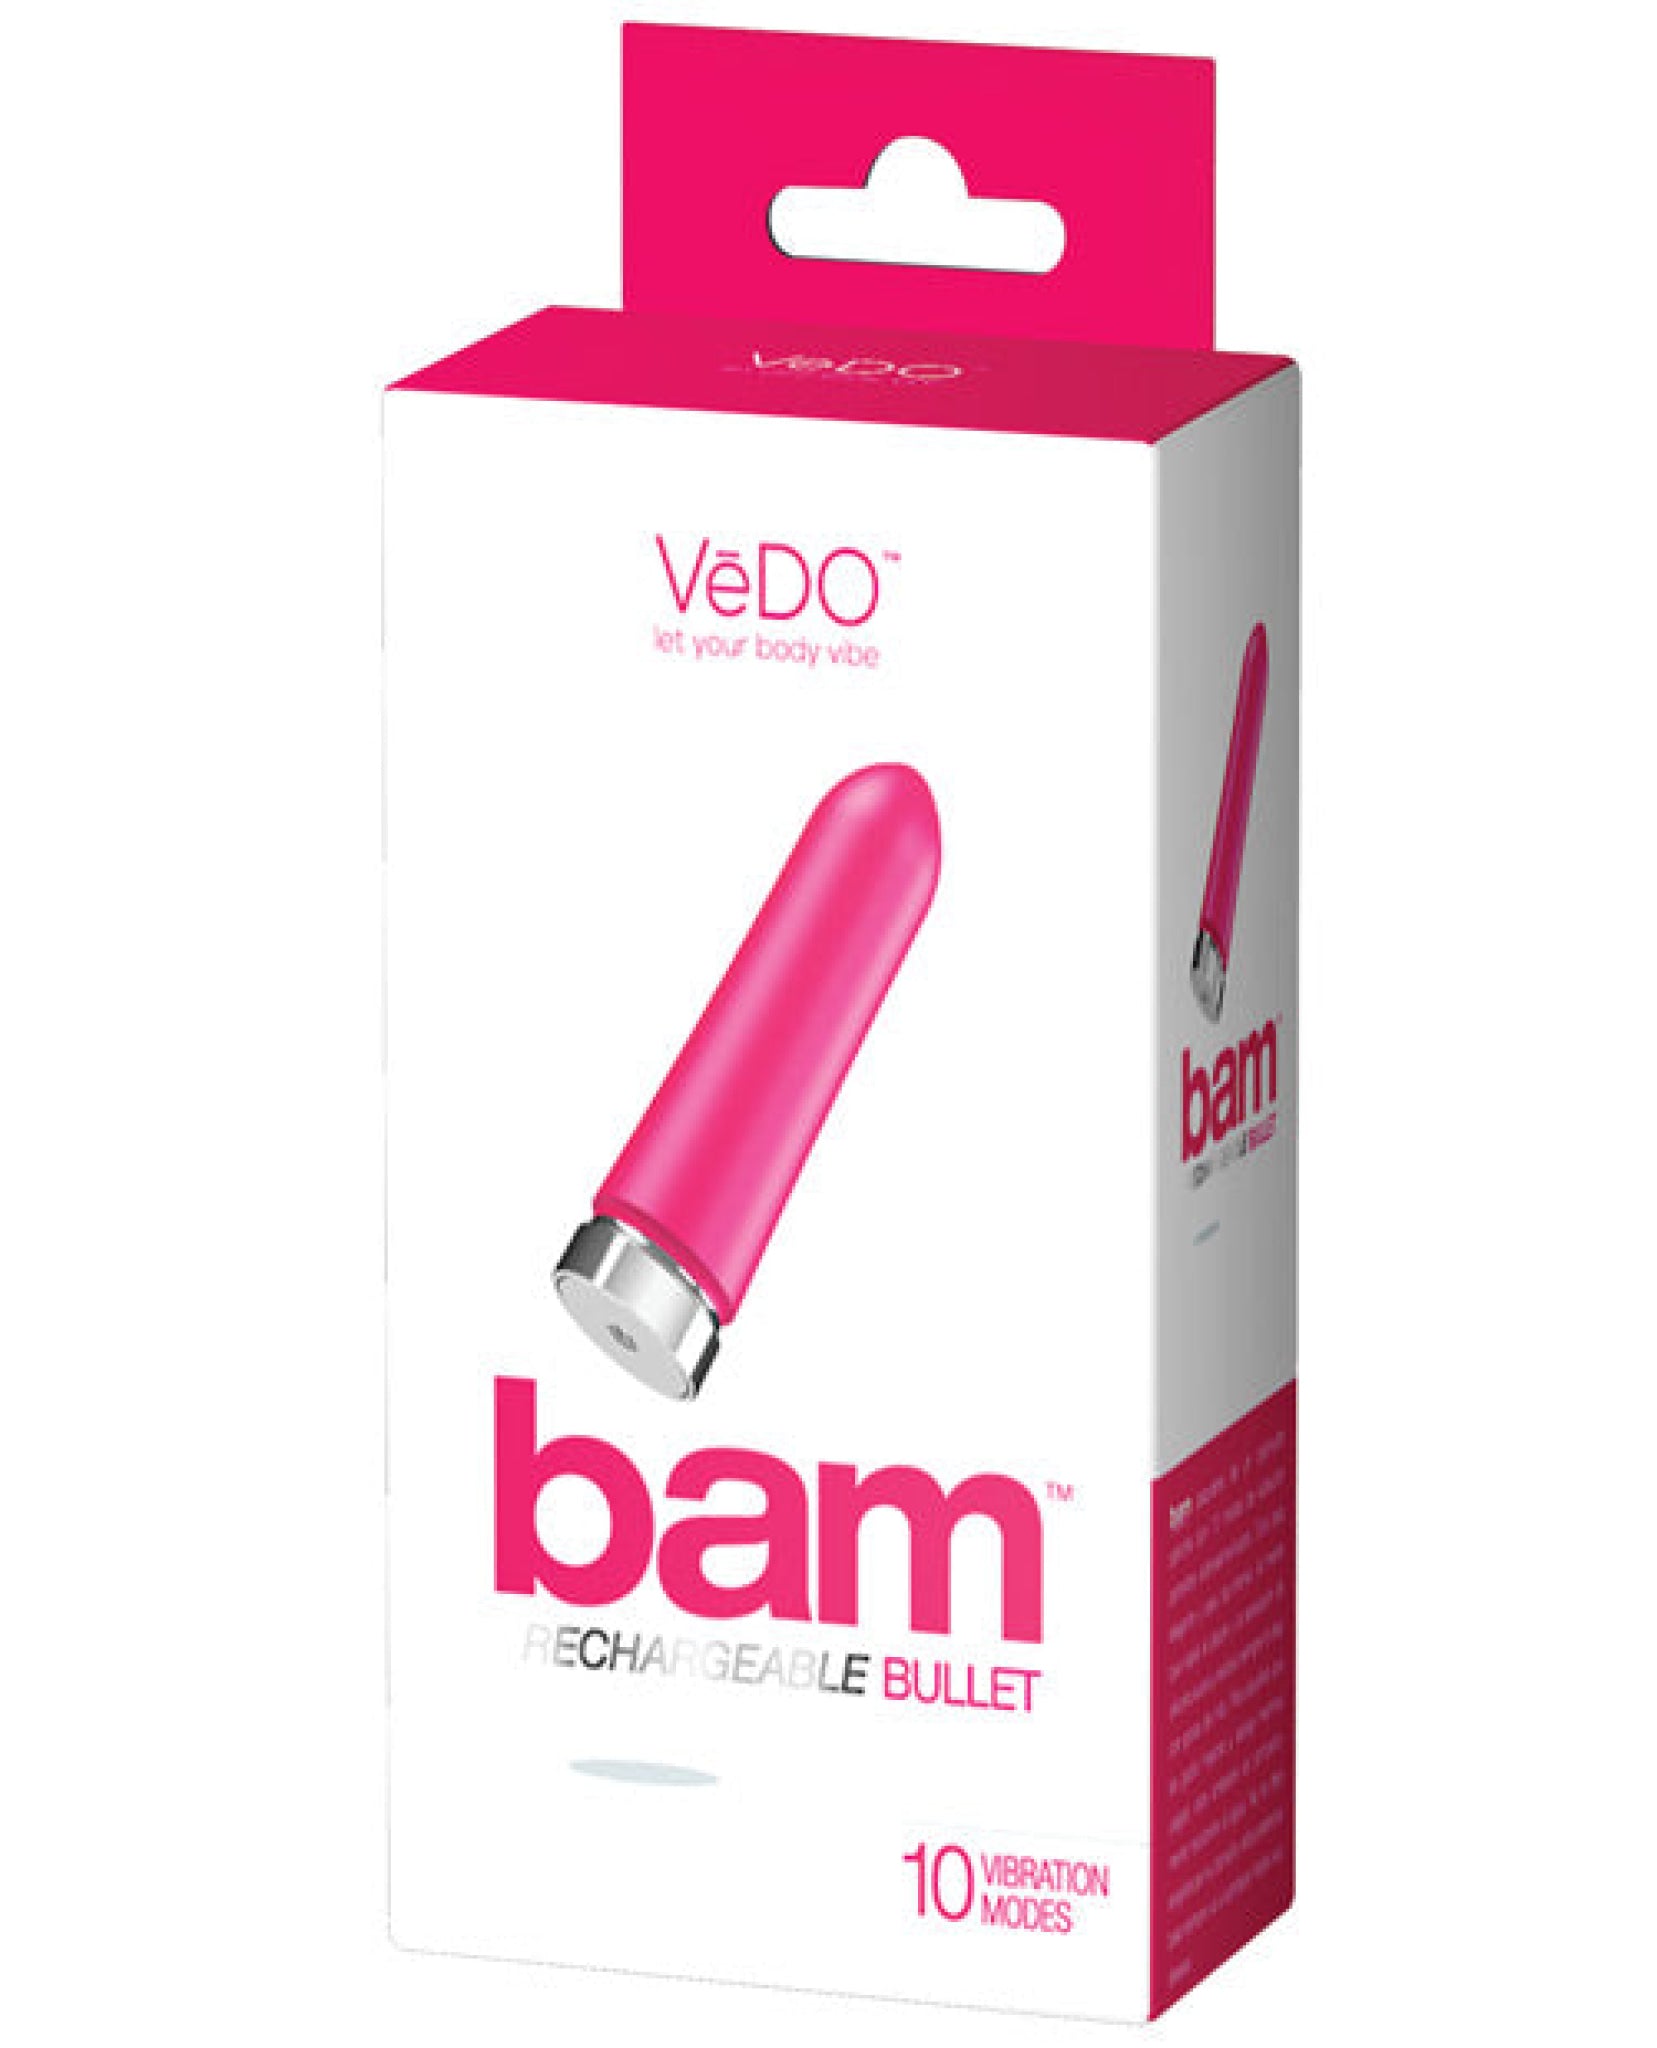 Vedo Bam Rechargeable Bullet VēDO